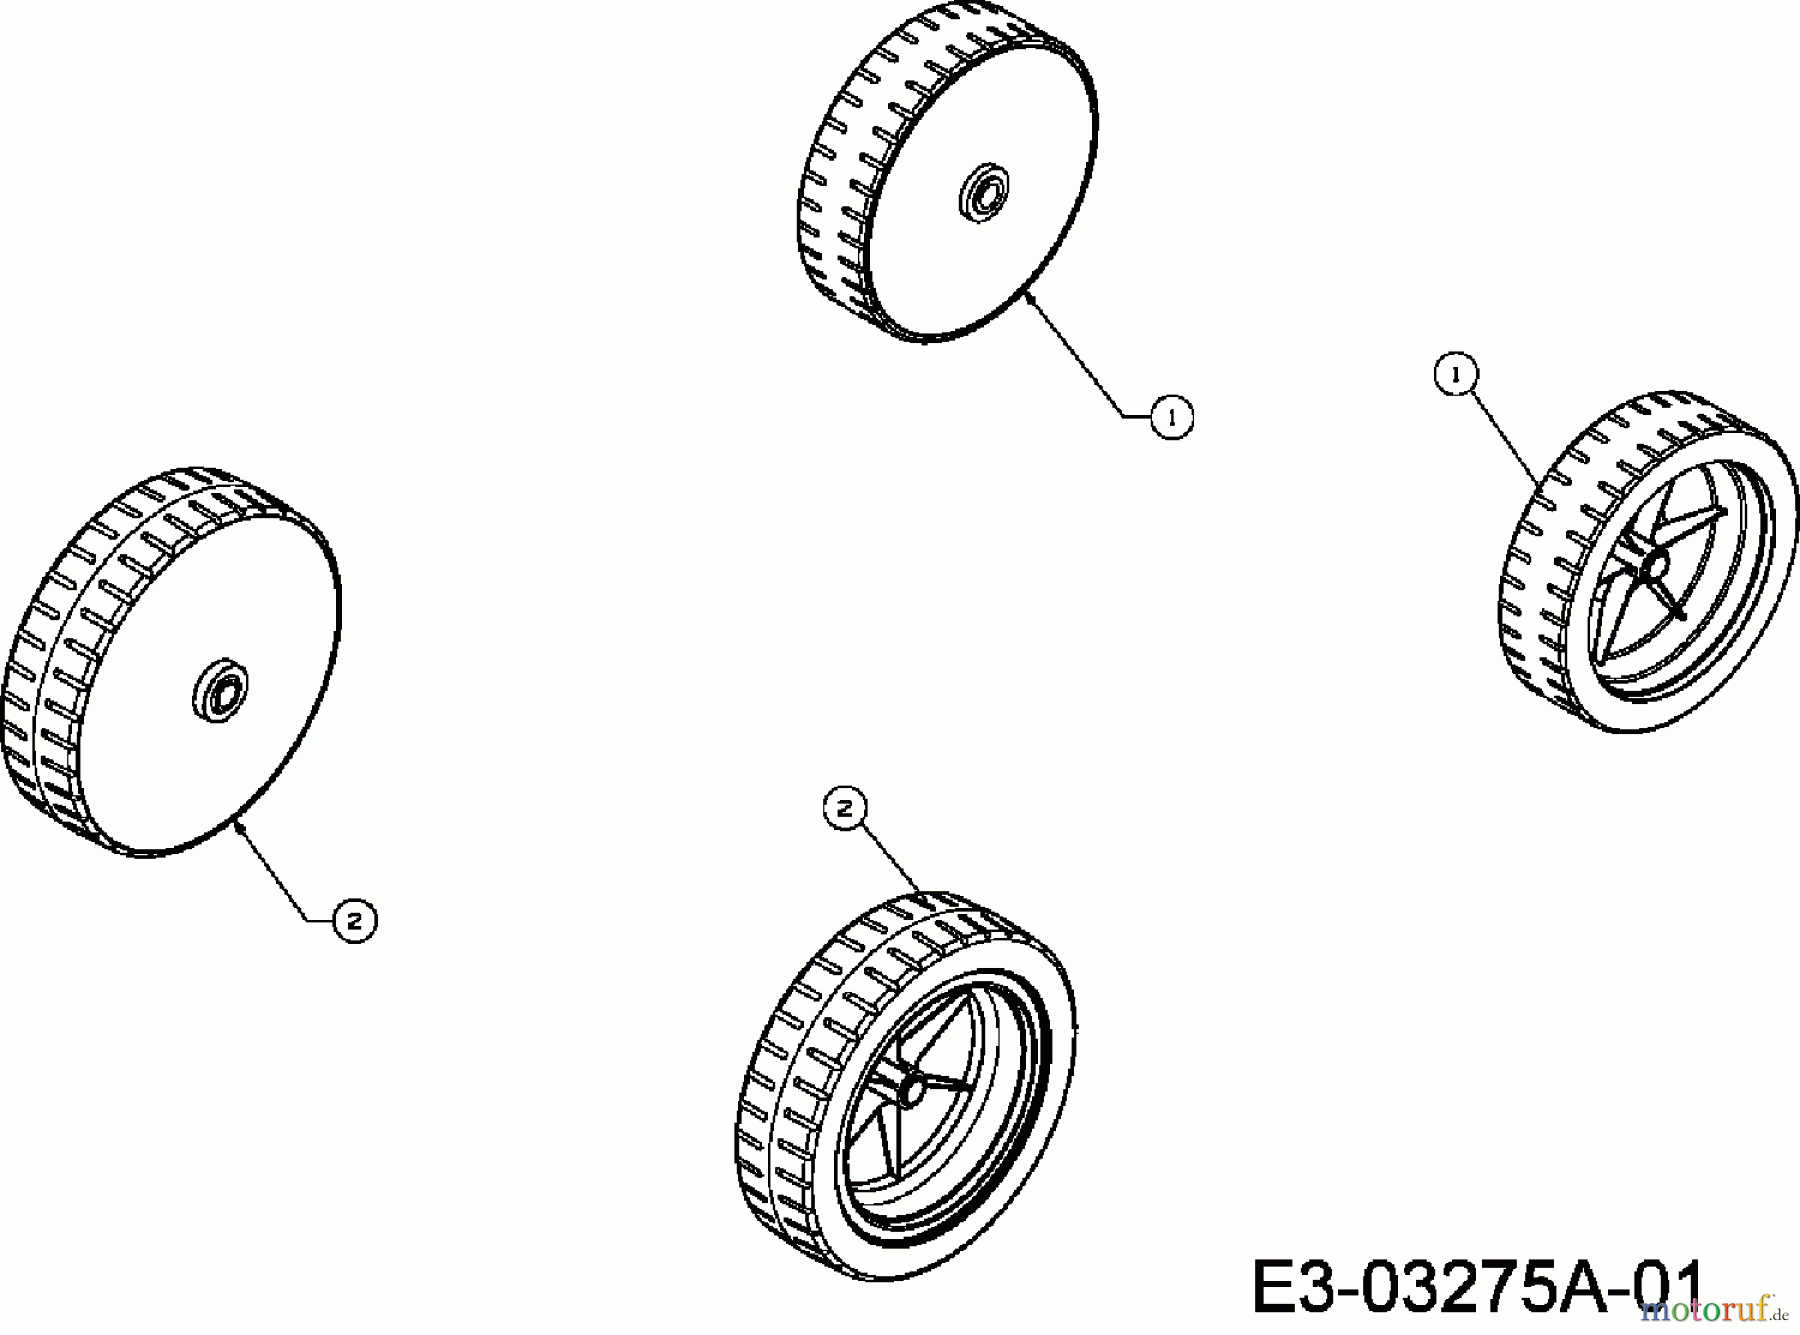  MTD Elektromäher E 40 W 18C-N4S-678  (2007) Räder